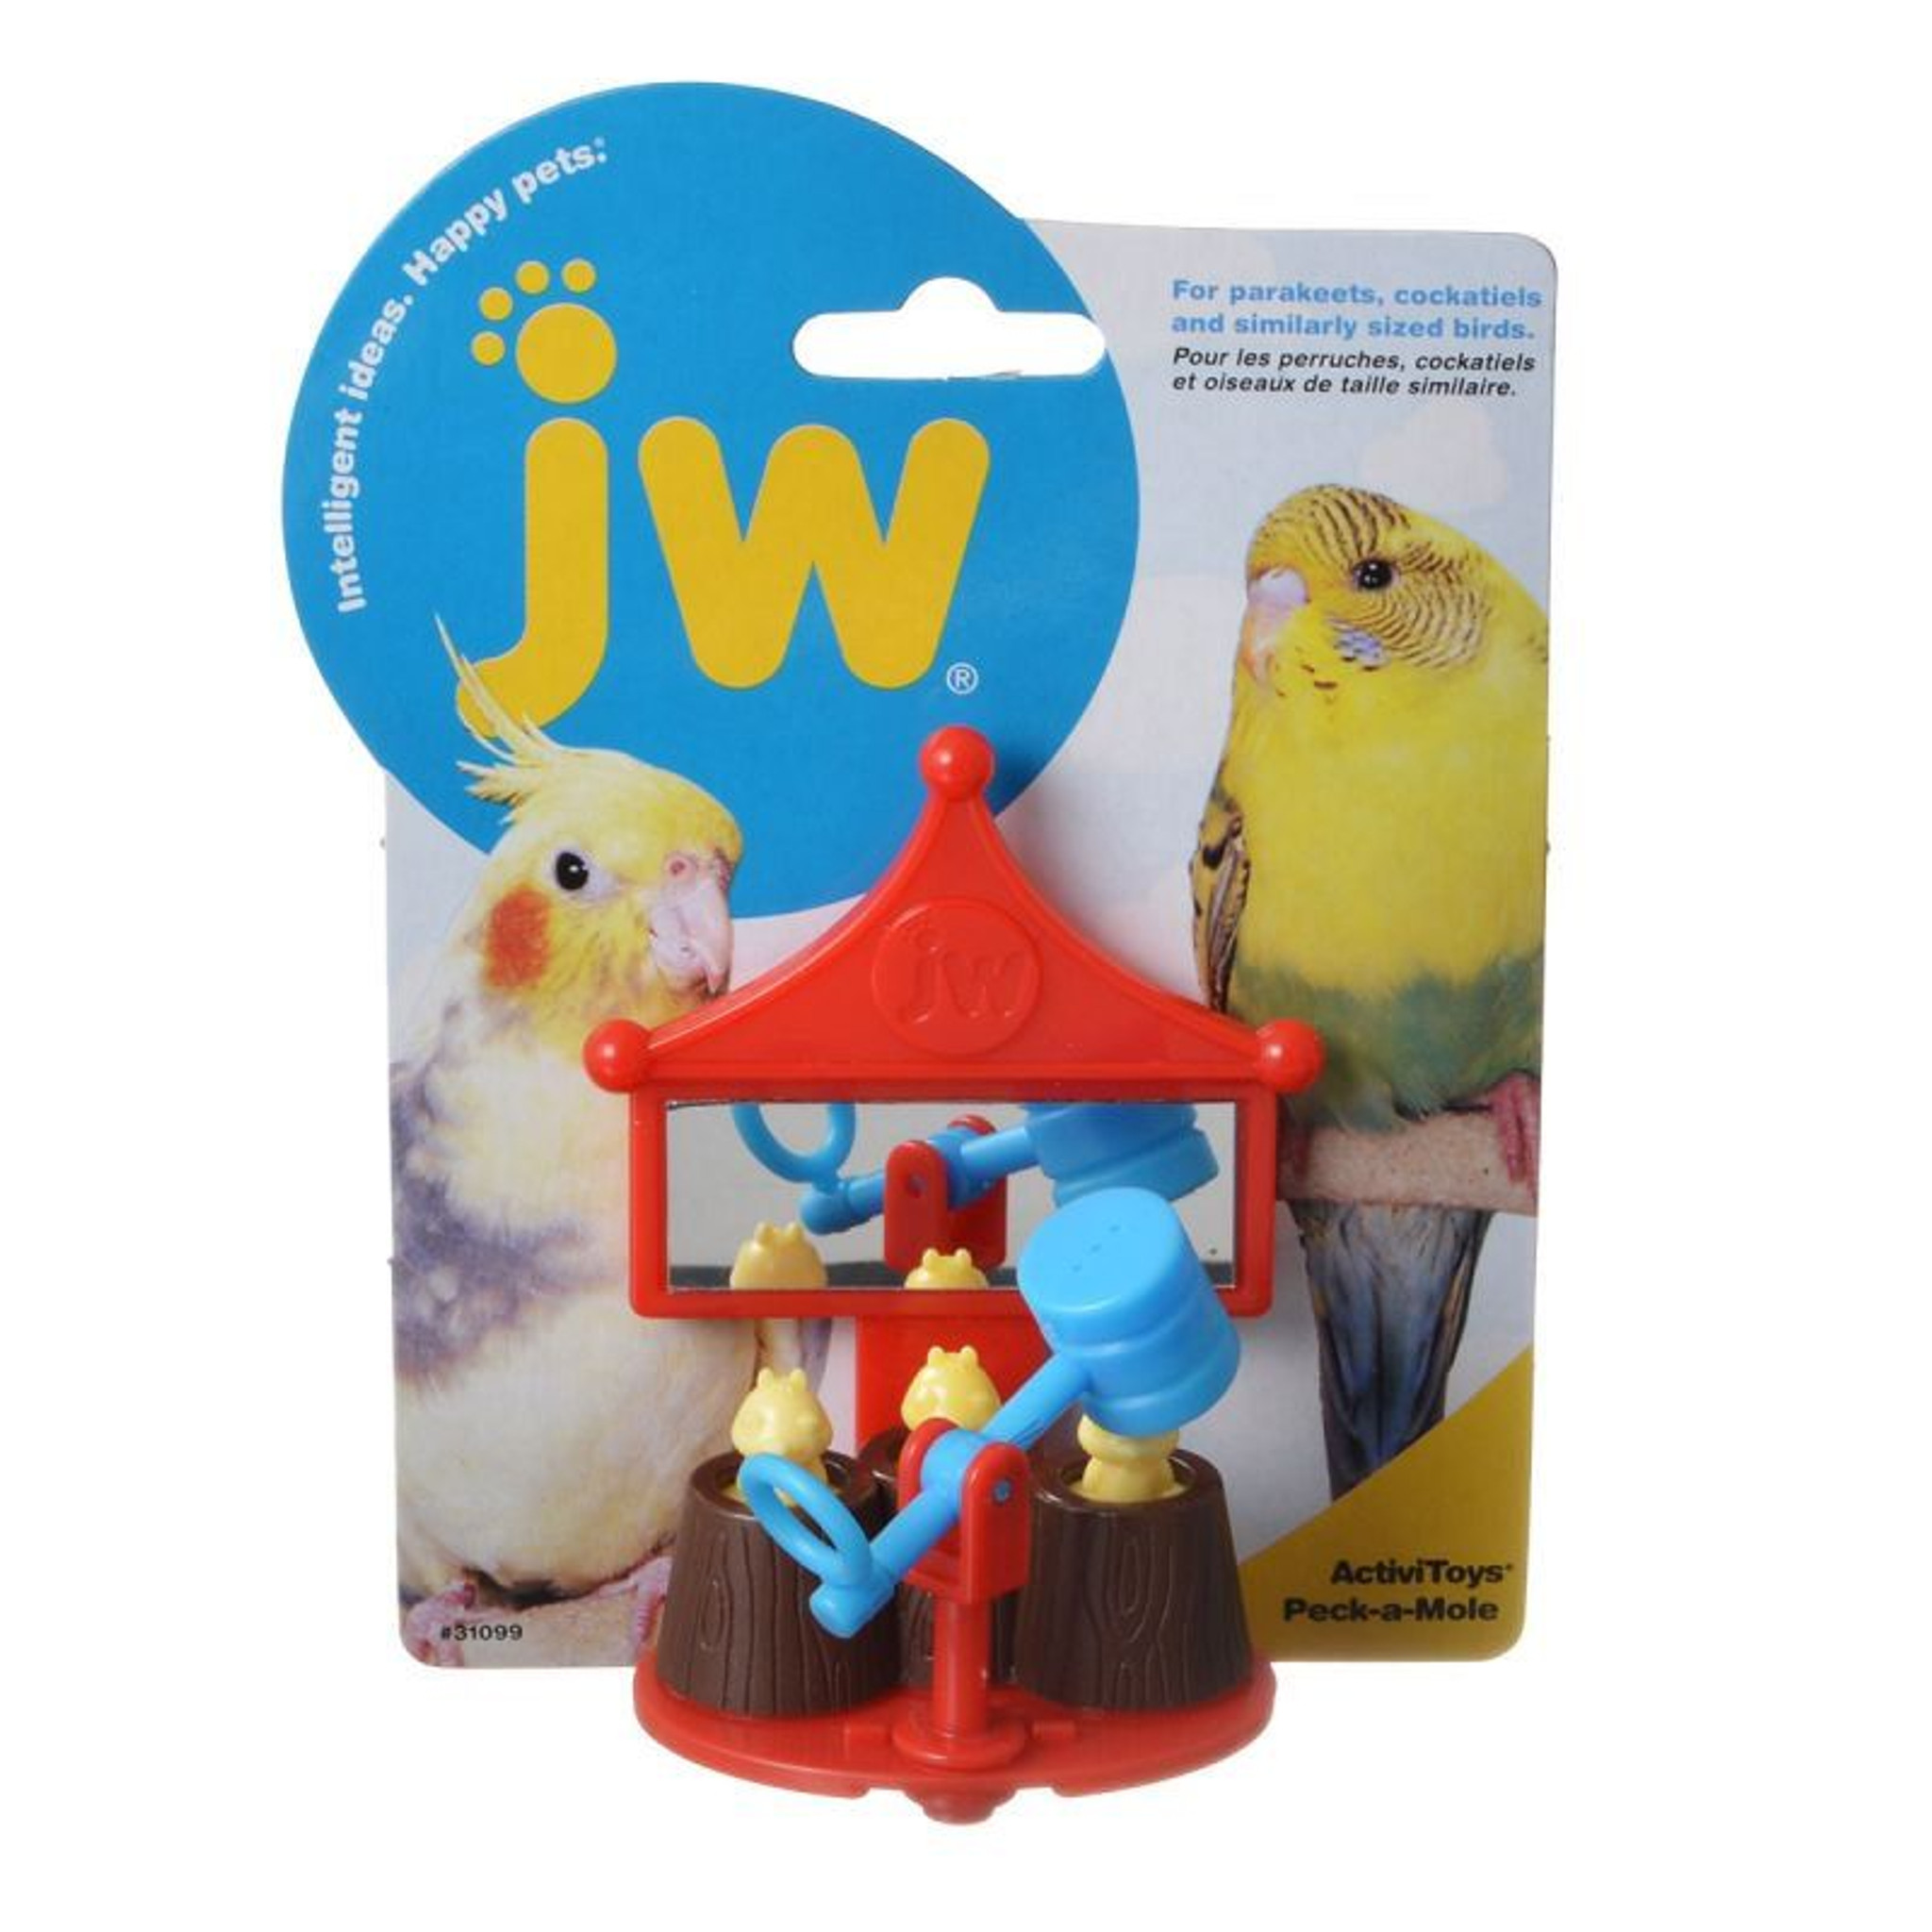 j&j birds supplies